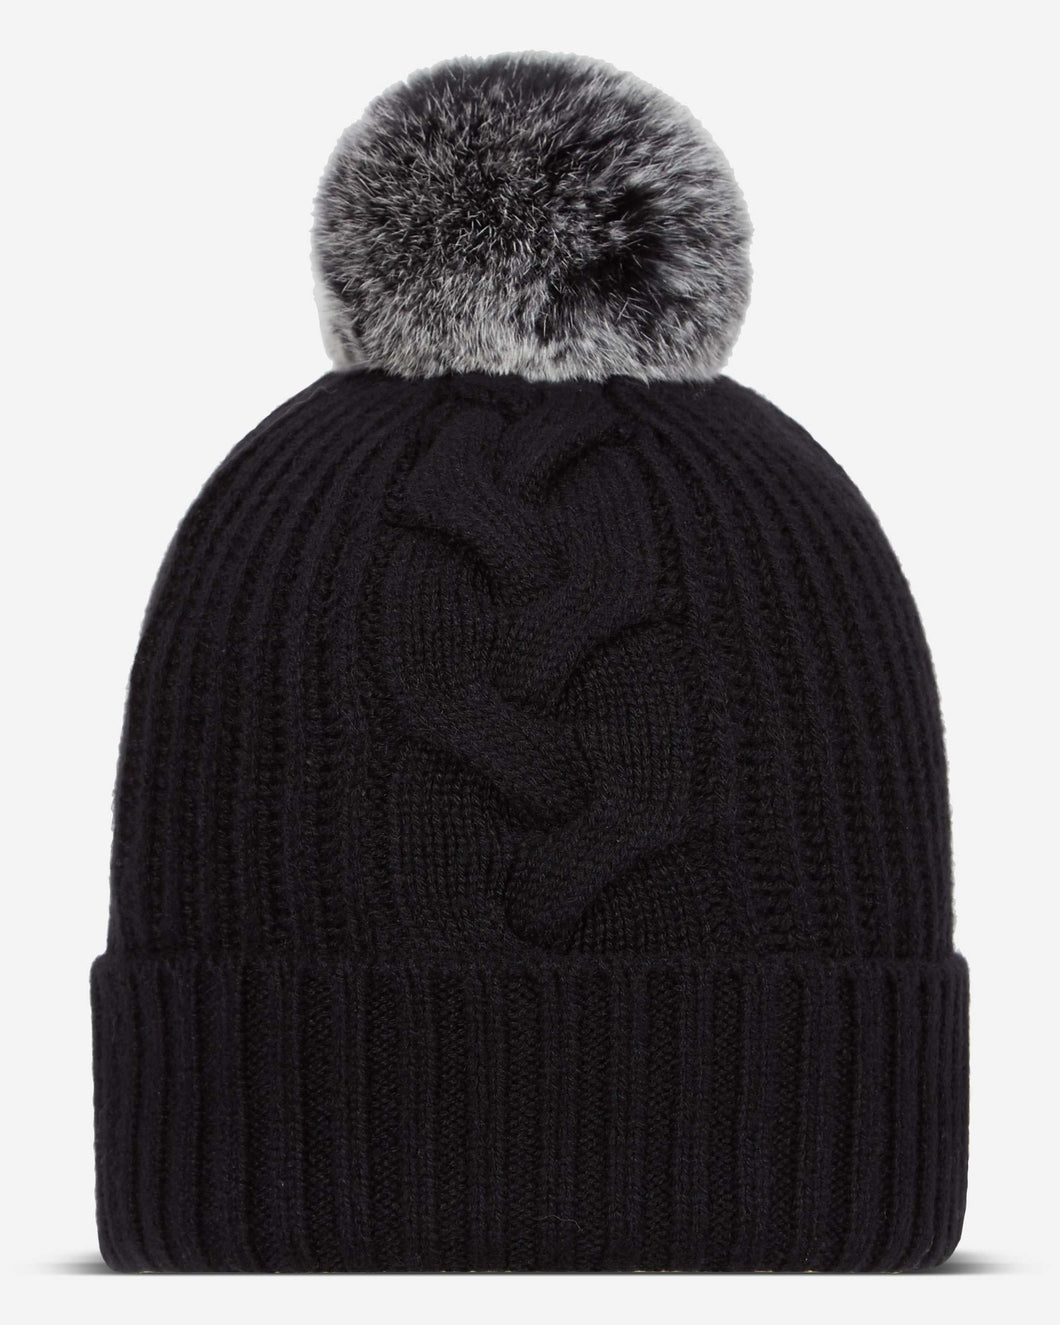 Fur Bobble Cable Hat Black + Black Tipped Fur